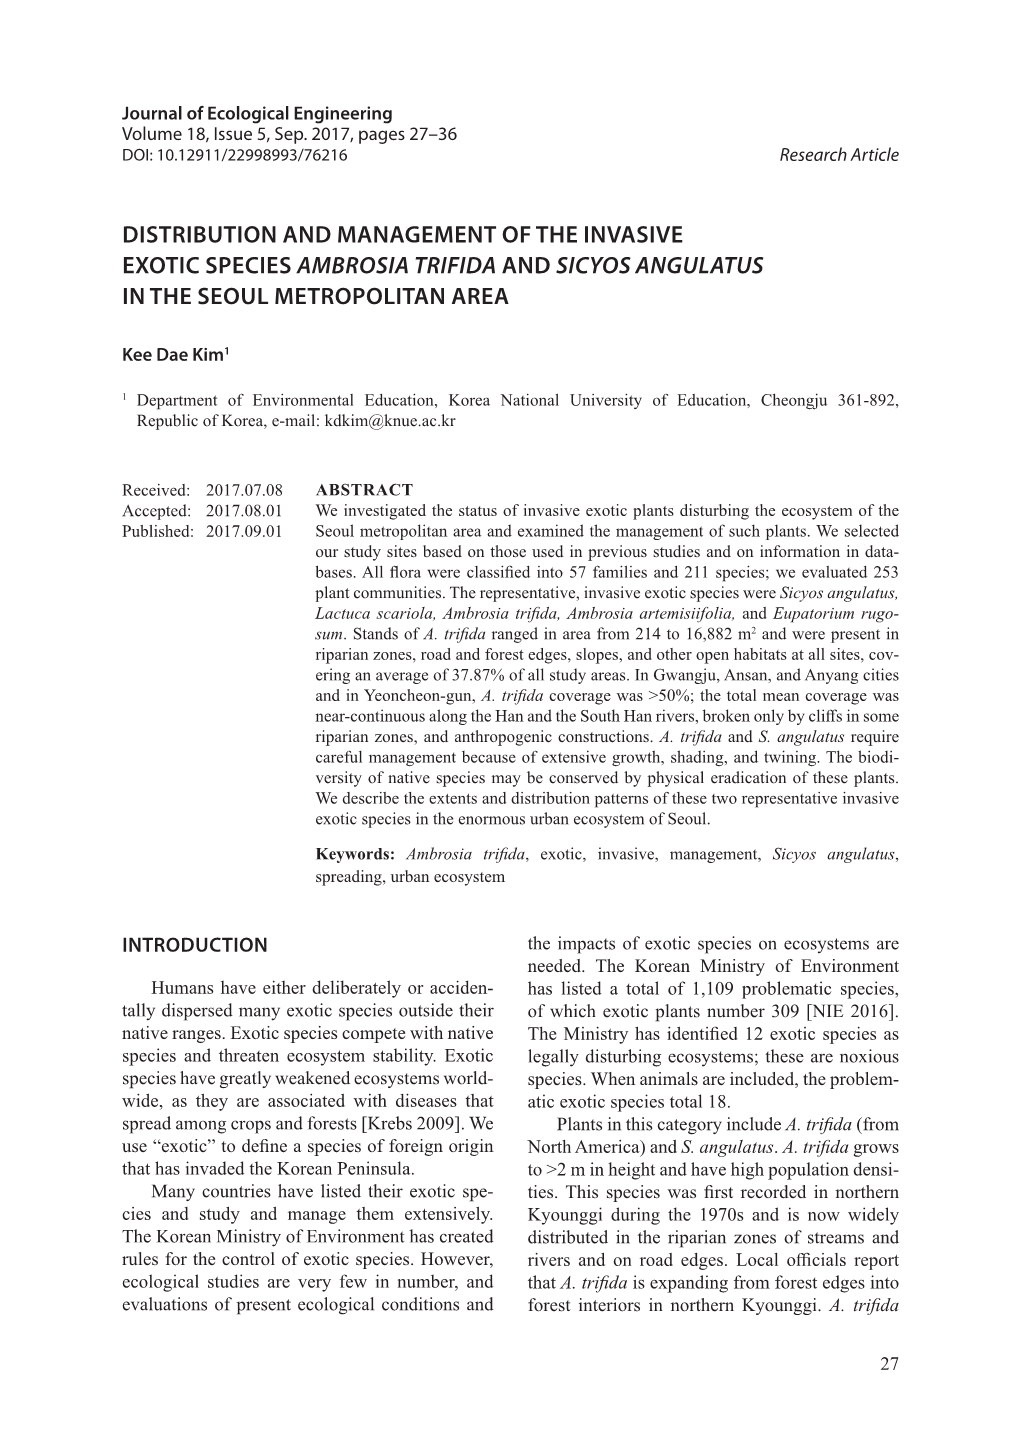 Distribution and Management of the Invasive Exotic Species Ambrosia Trifida and Sicyos Angulatus in the Seoul Metropolitan Area